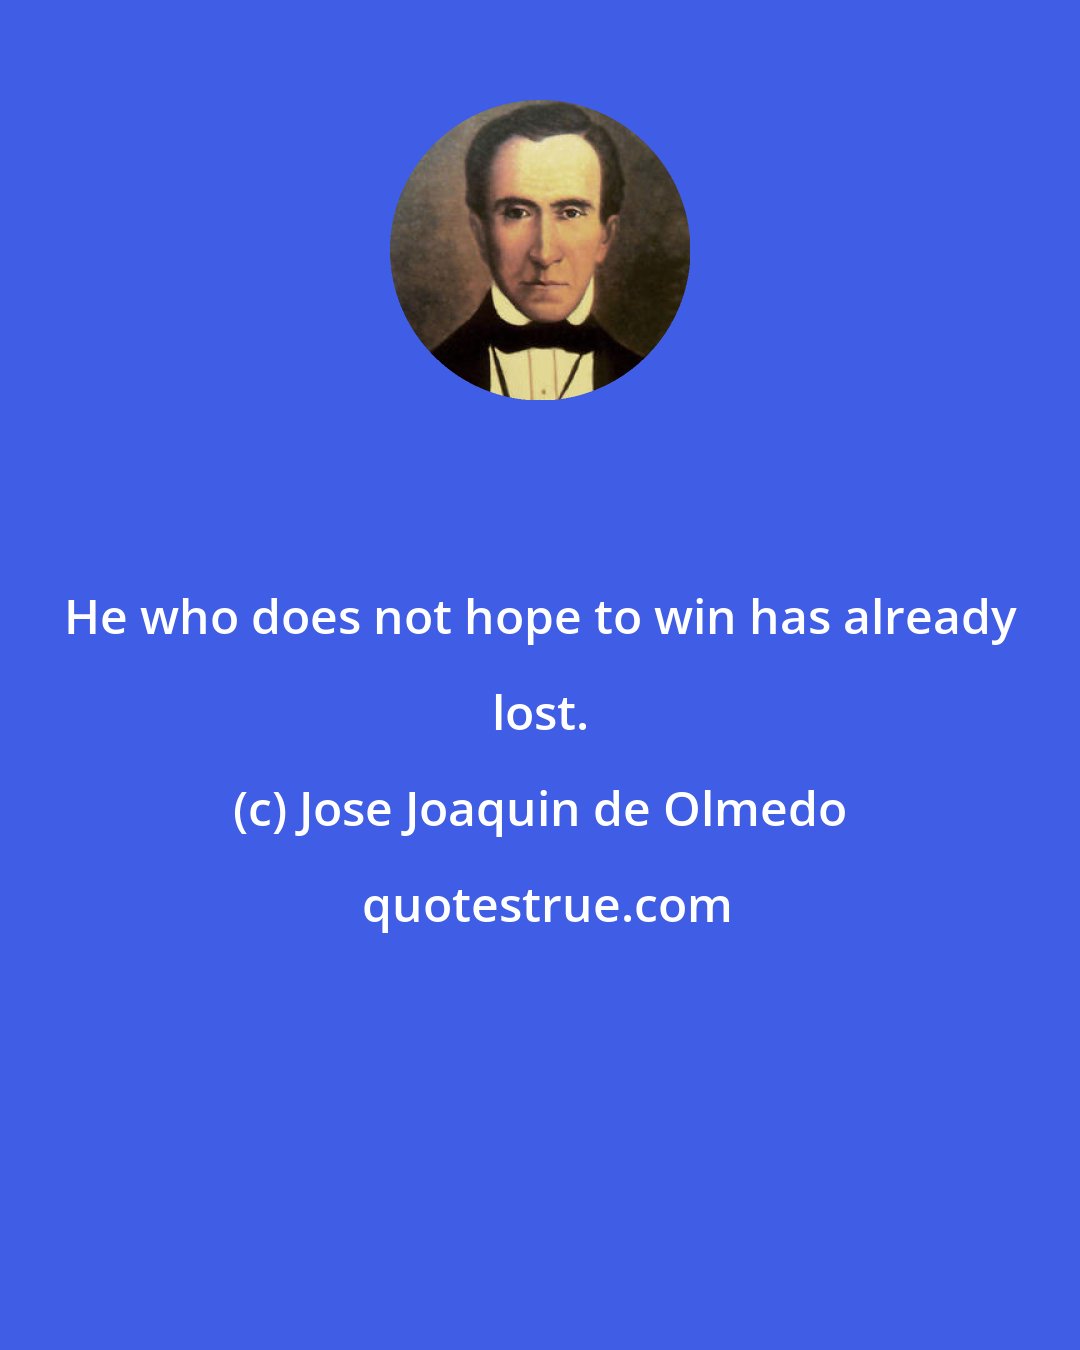 Jose Joaquin de Olmedo: He who does not hope to win has already lost.